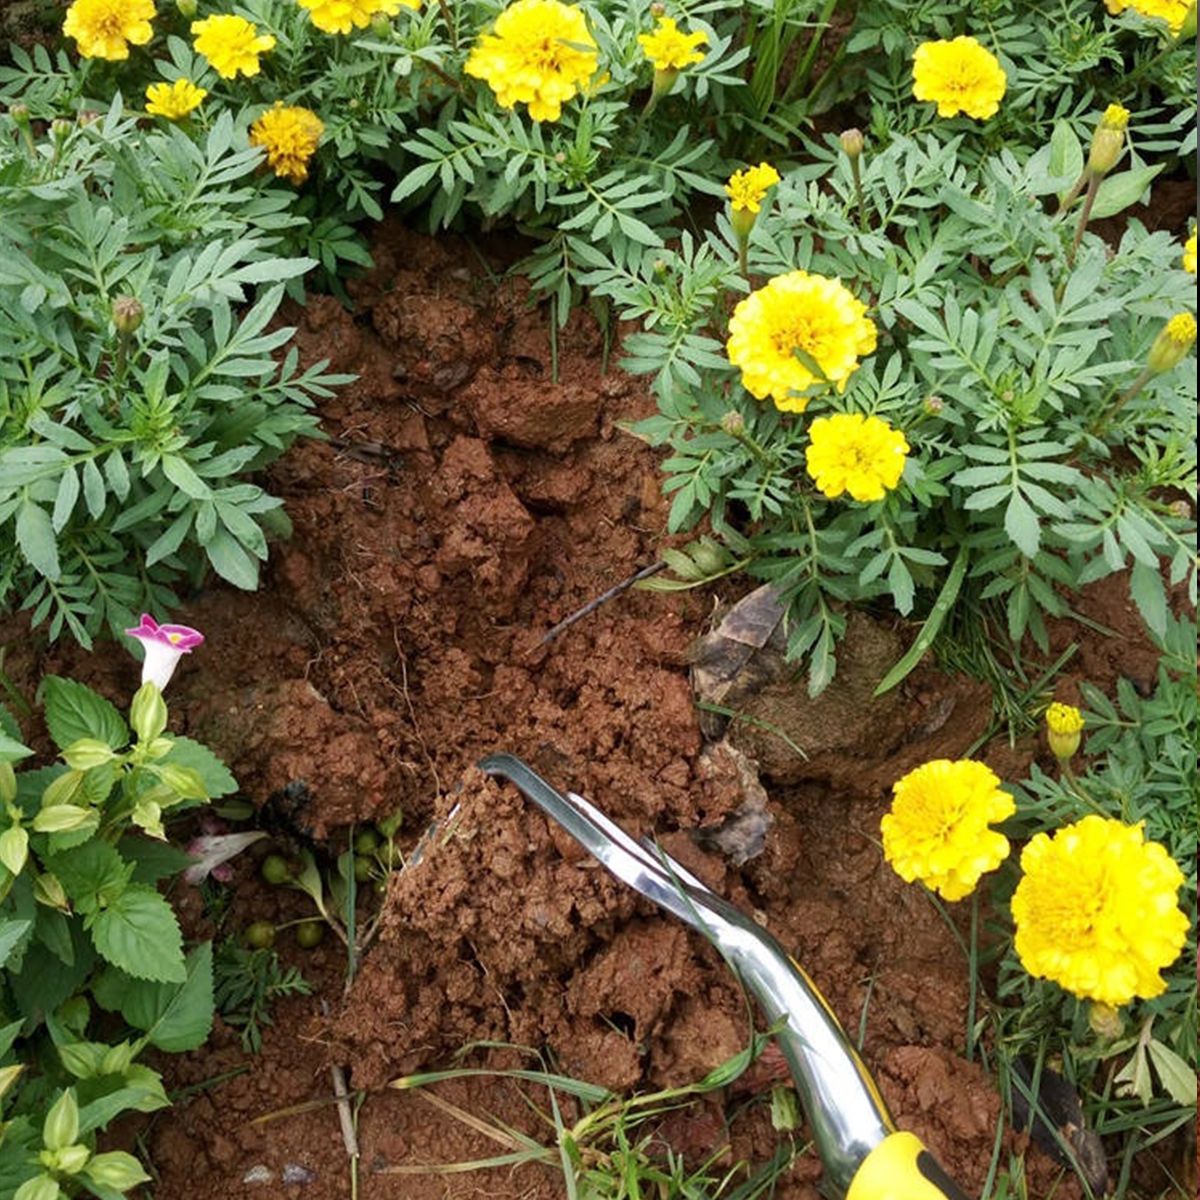 59PCS-Garden-Tool-Bag-Toolbag-Manual-Gardening-Planting-Hand-Fork-Digging-Tool-1695521